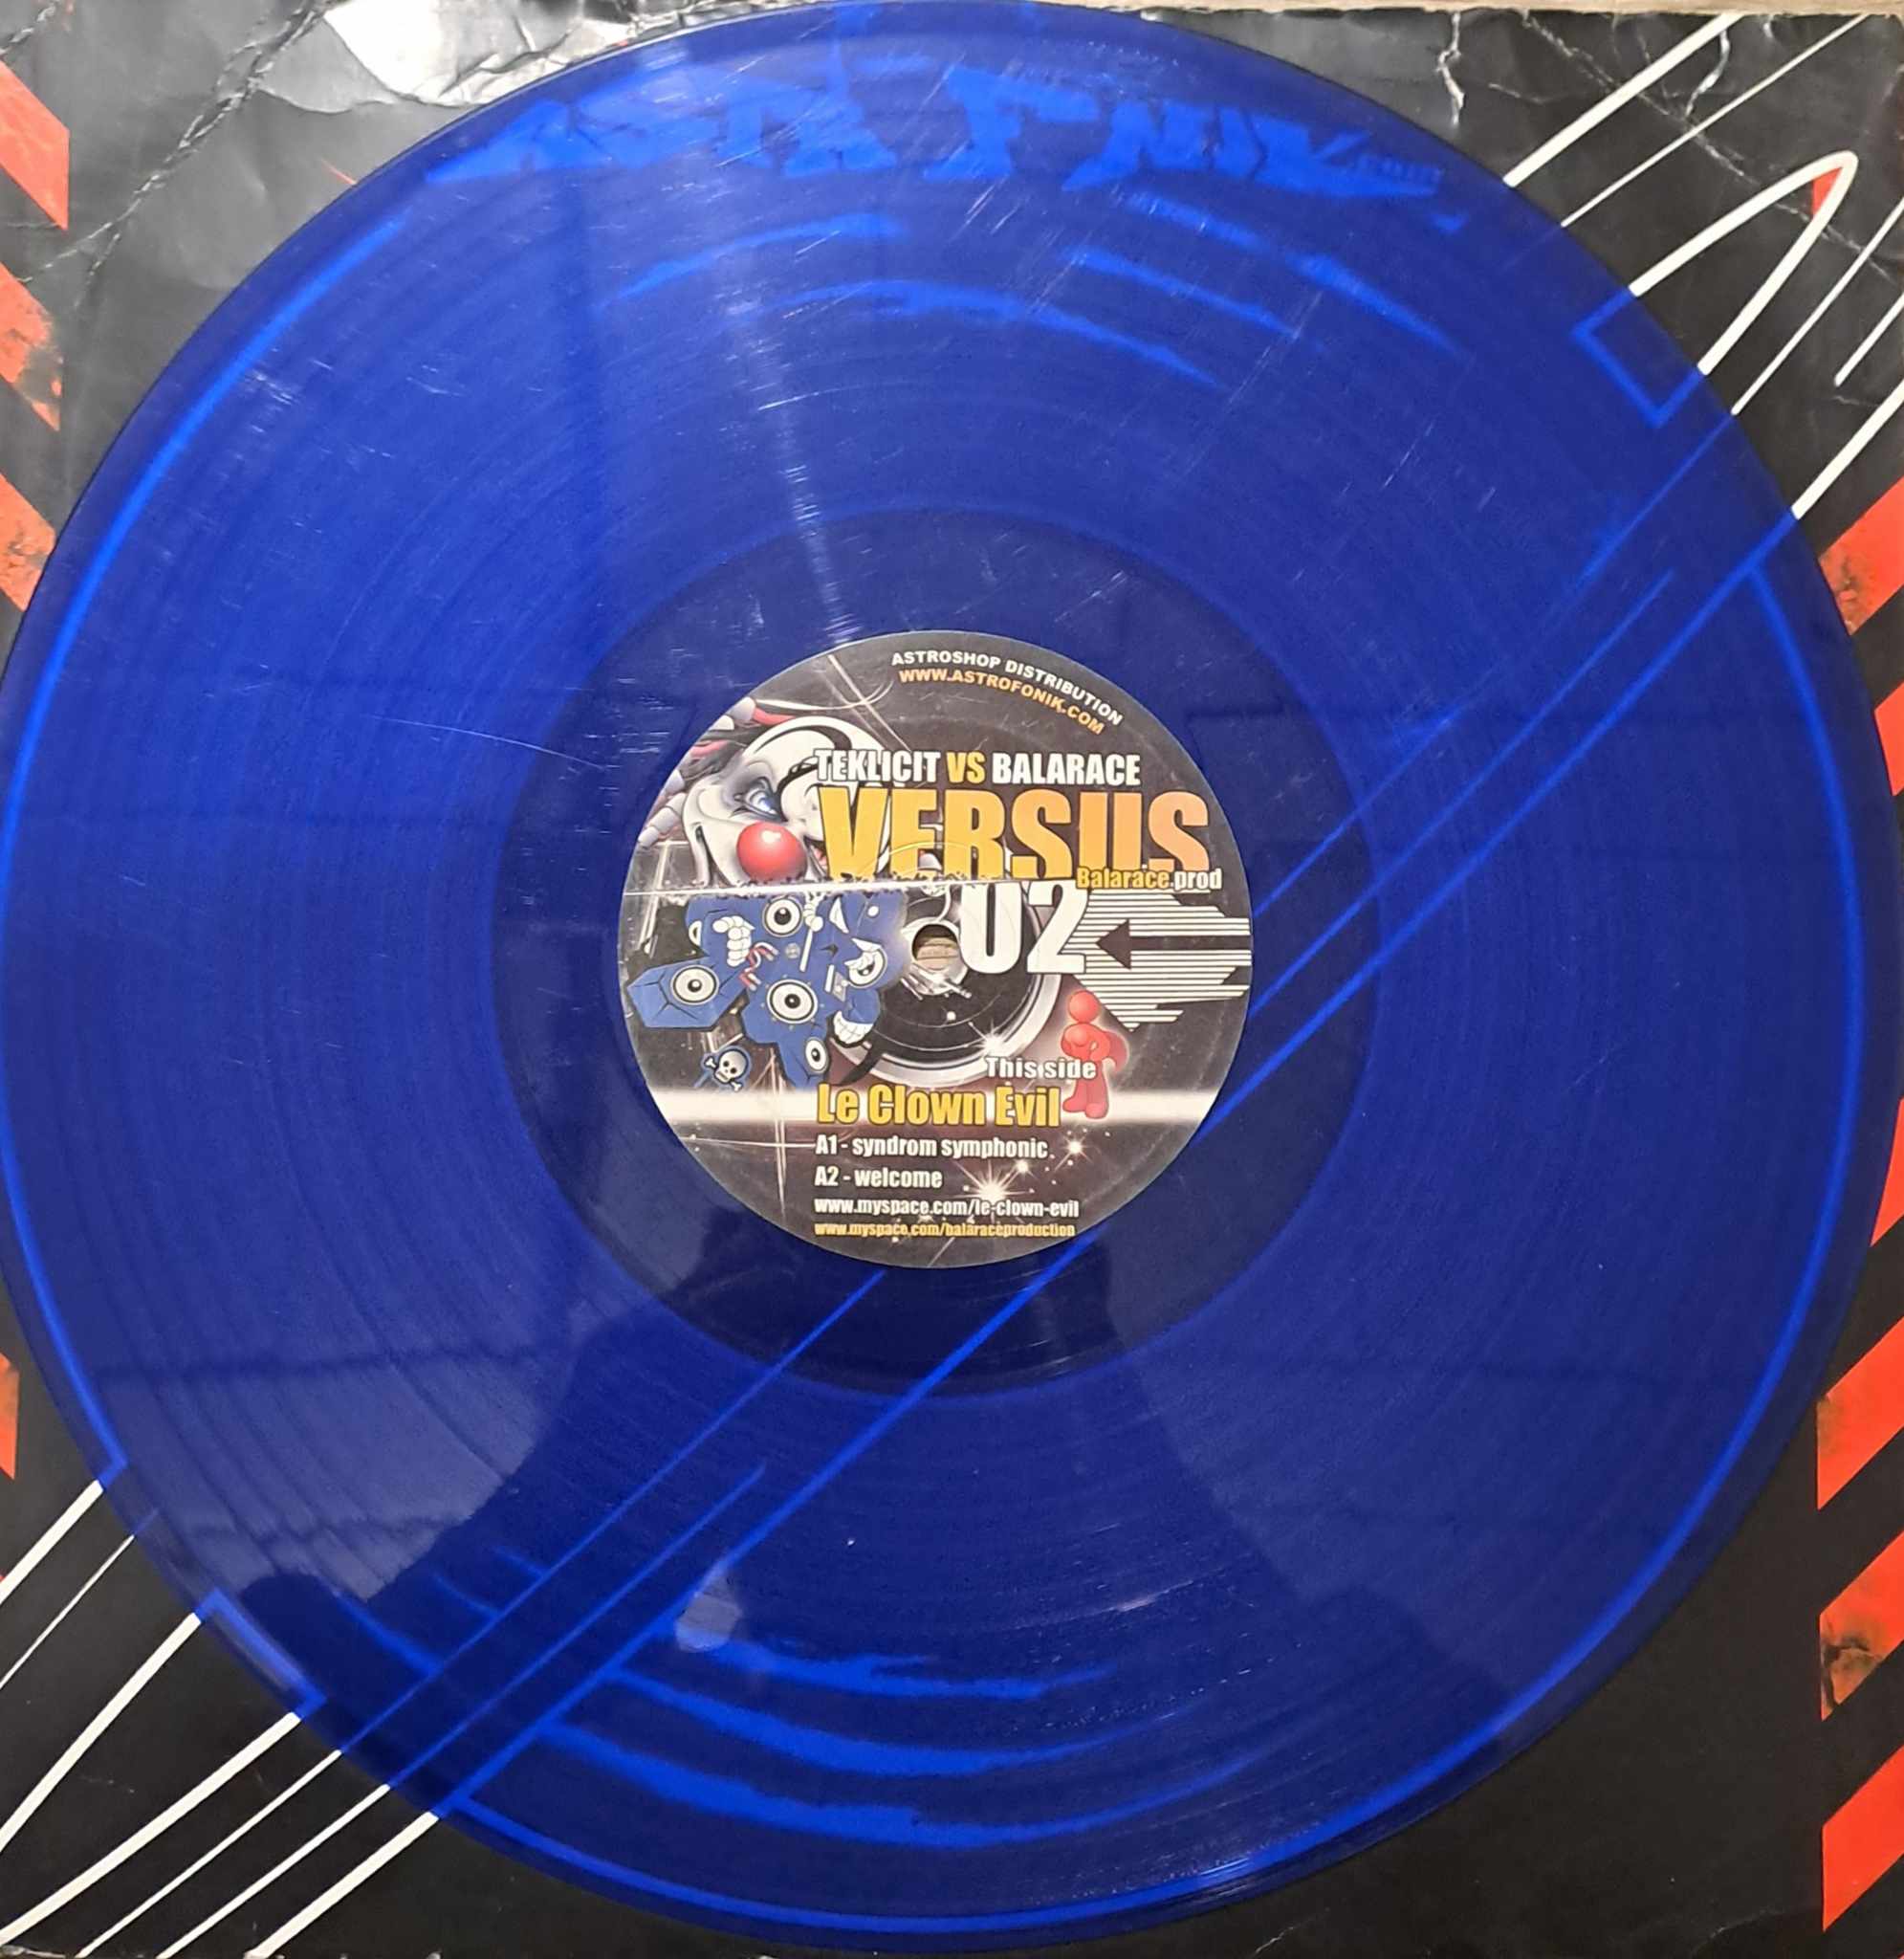 Versus 02 (bleu) - vinyle freetekno